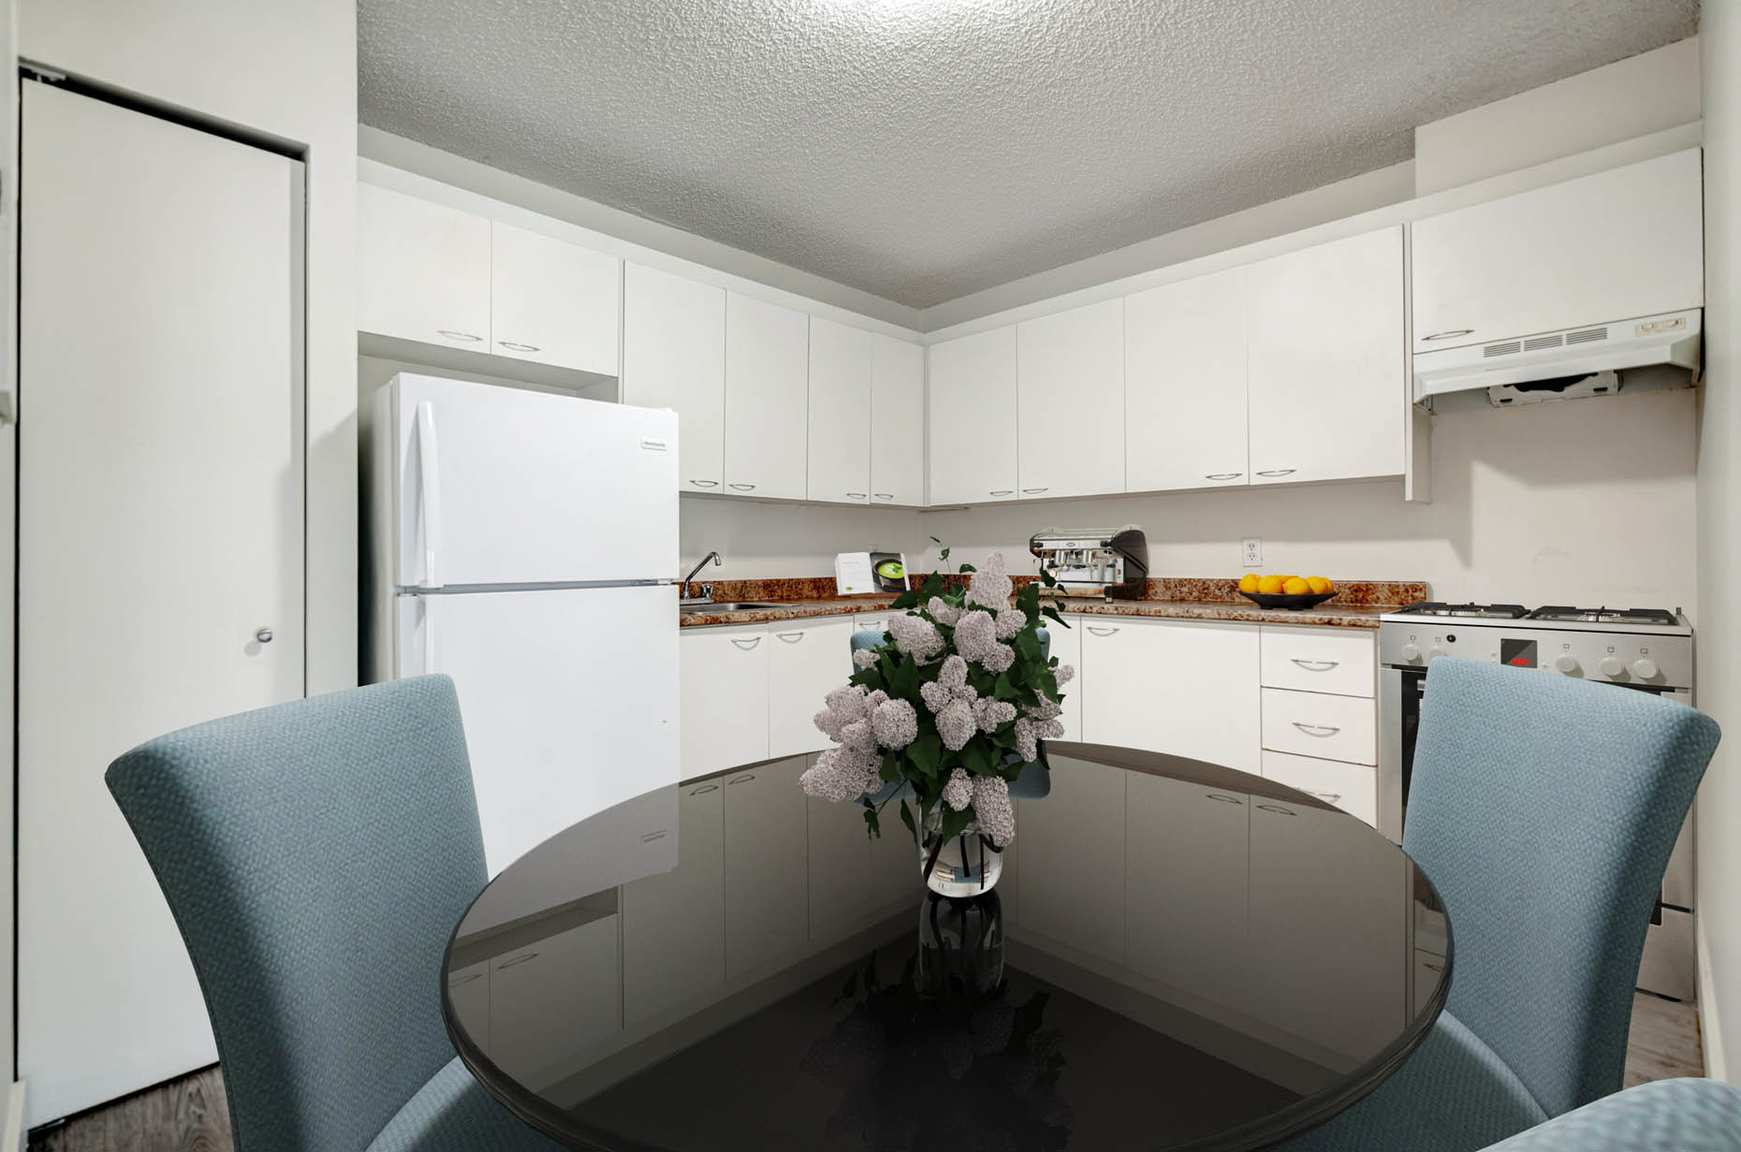 2 bedroom Apartments for rent in Ville St-Laurent - Bois-Franc at Complexe Deguire - Photo 06 - RentQuebecApartments – L417457